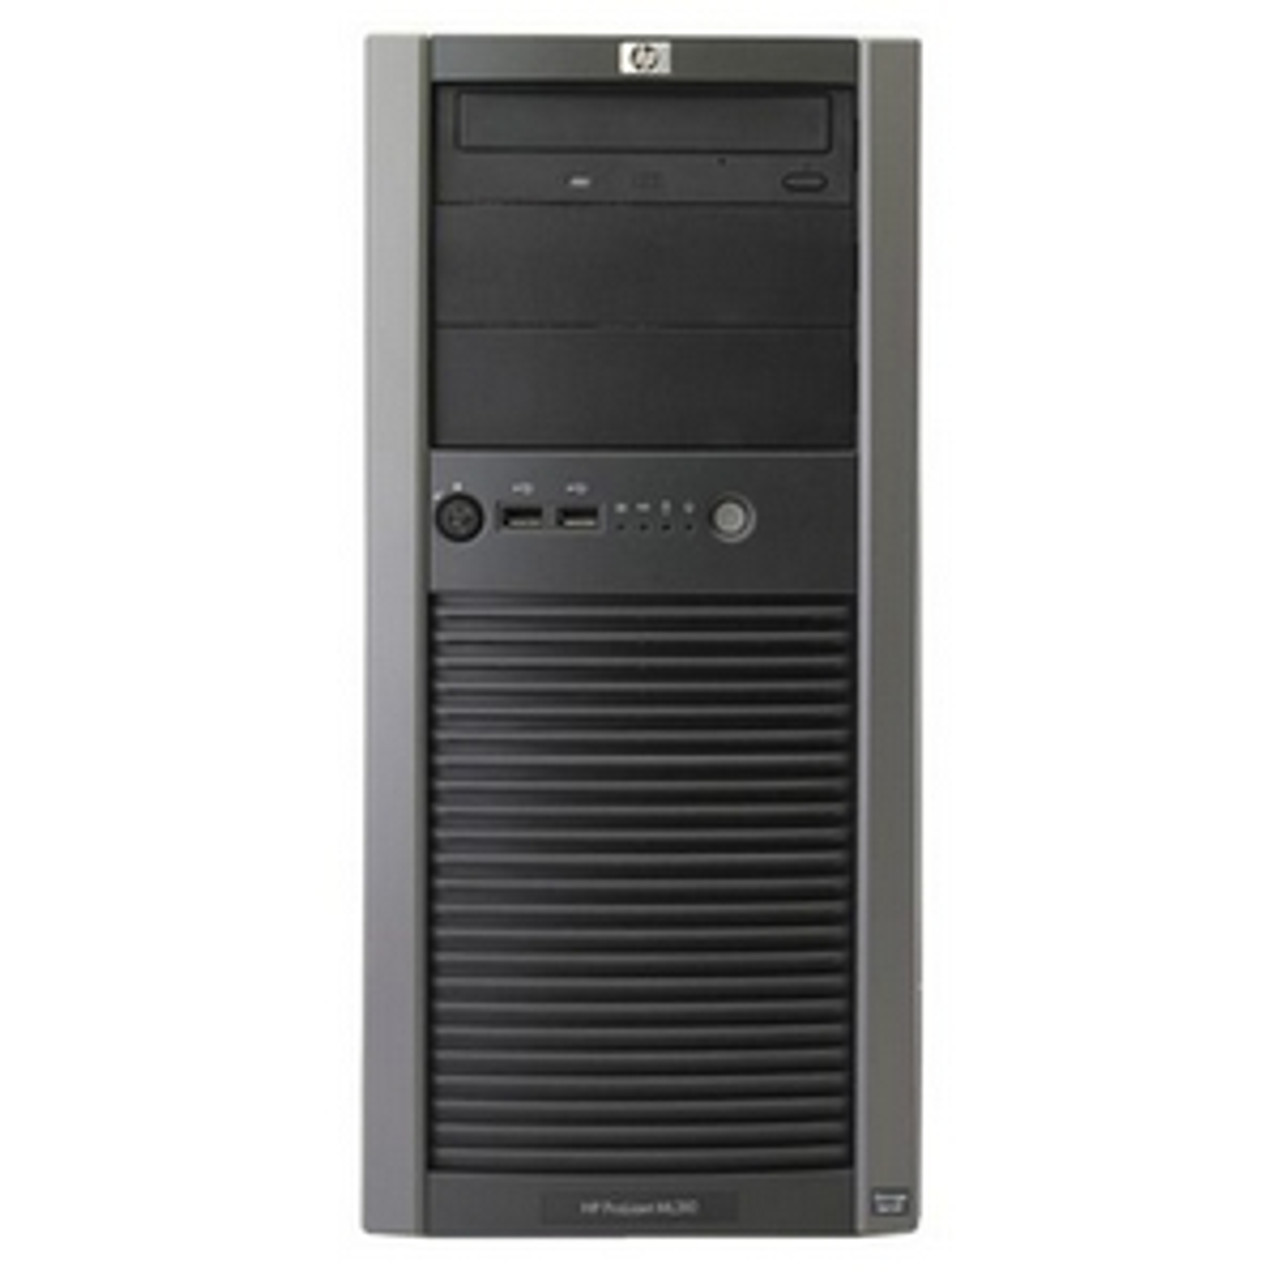 AG615A - HP ProLiant ML310 G4 Intel 3.4GHz Pentium Dual Core 3TB (4X750GB) SATA Storage Server